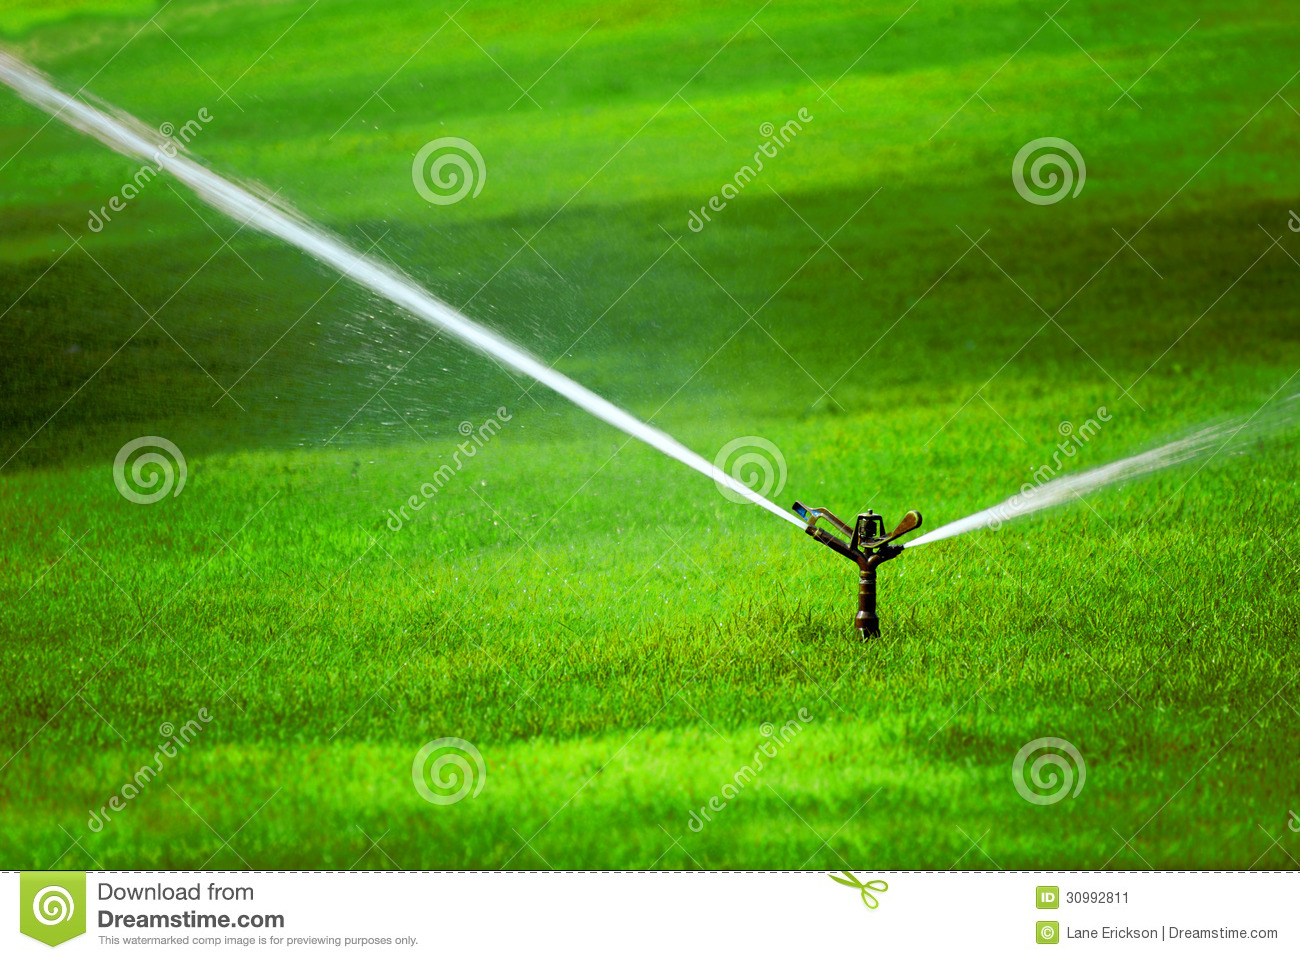 Sprinkler Spraying Stream Of Water On Lush Green Grass